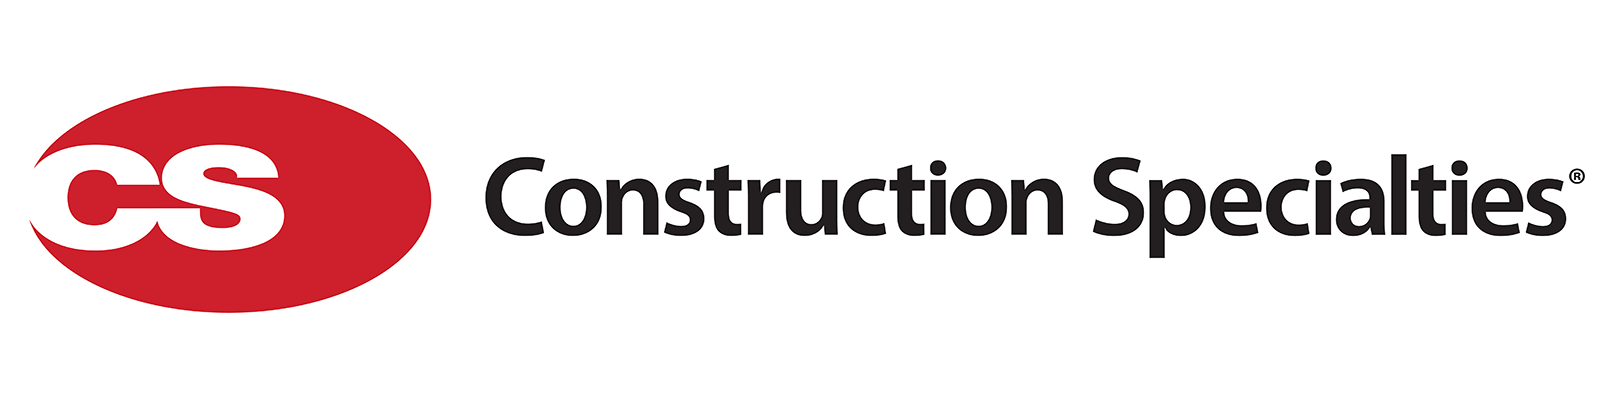 Industry Partner Construction Specialties